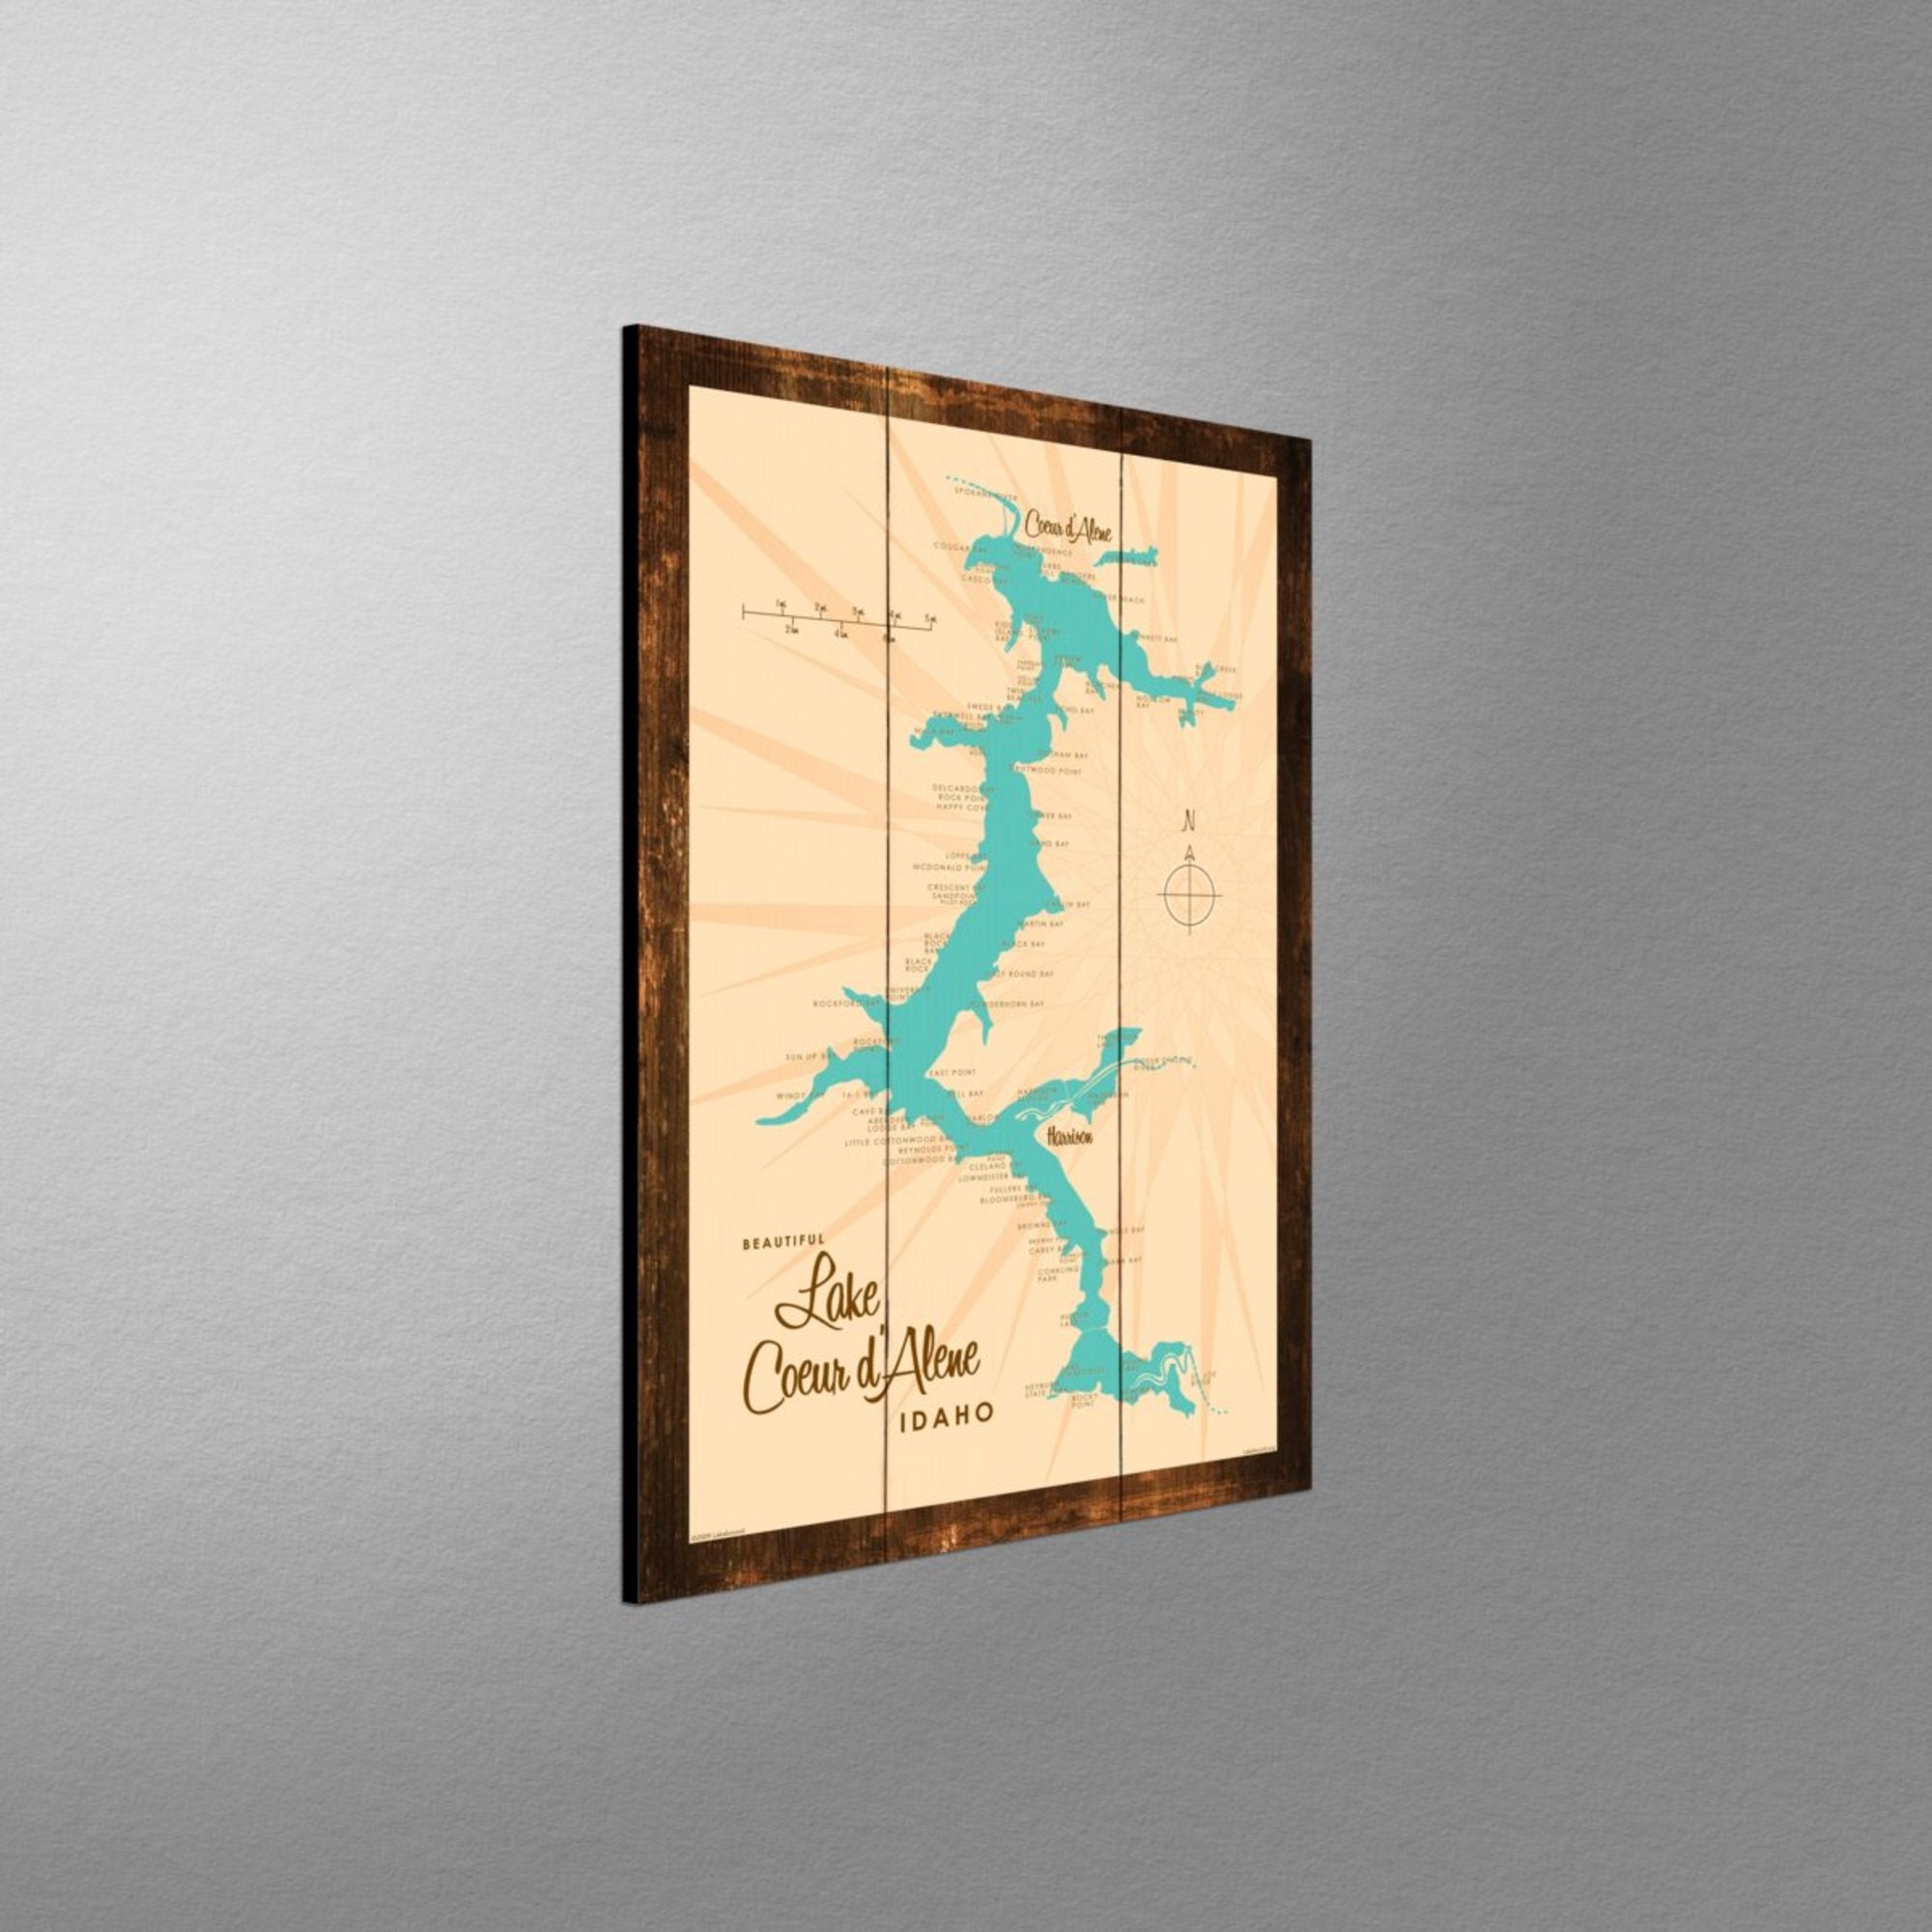 Coeur d'Alene Idaho, Rustic Wood Sign Map Art